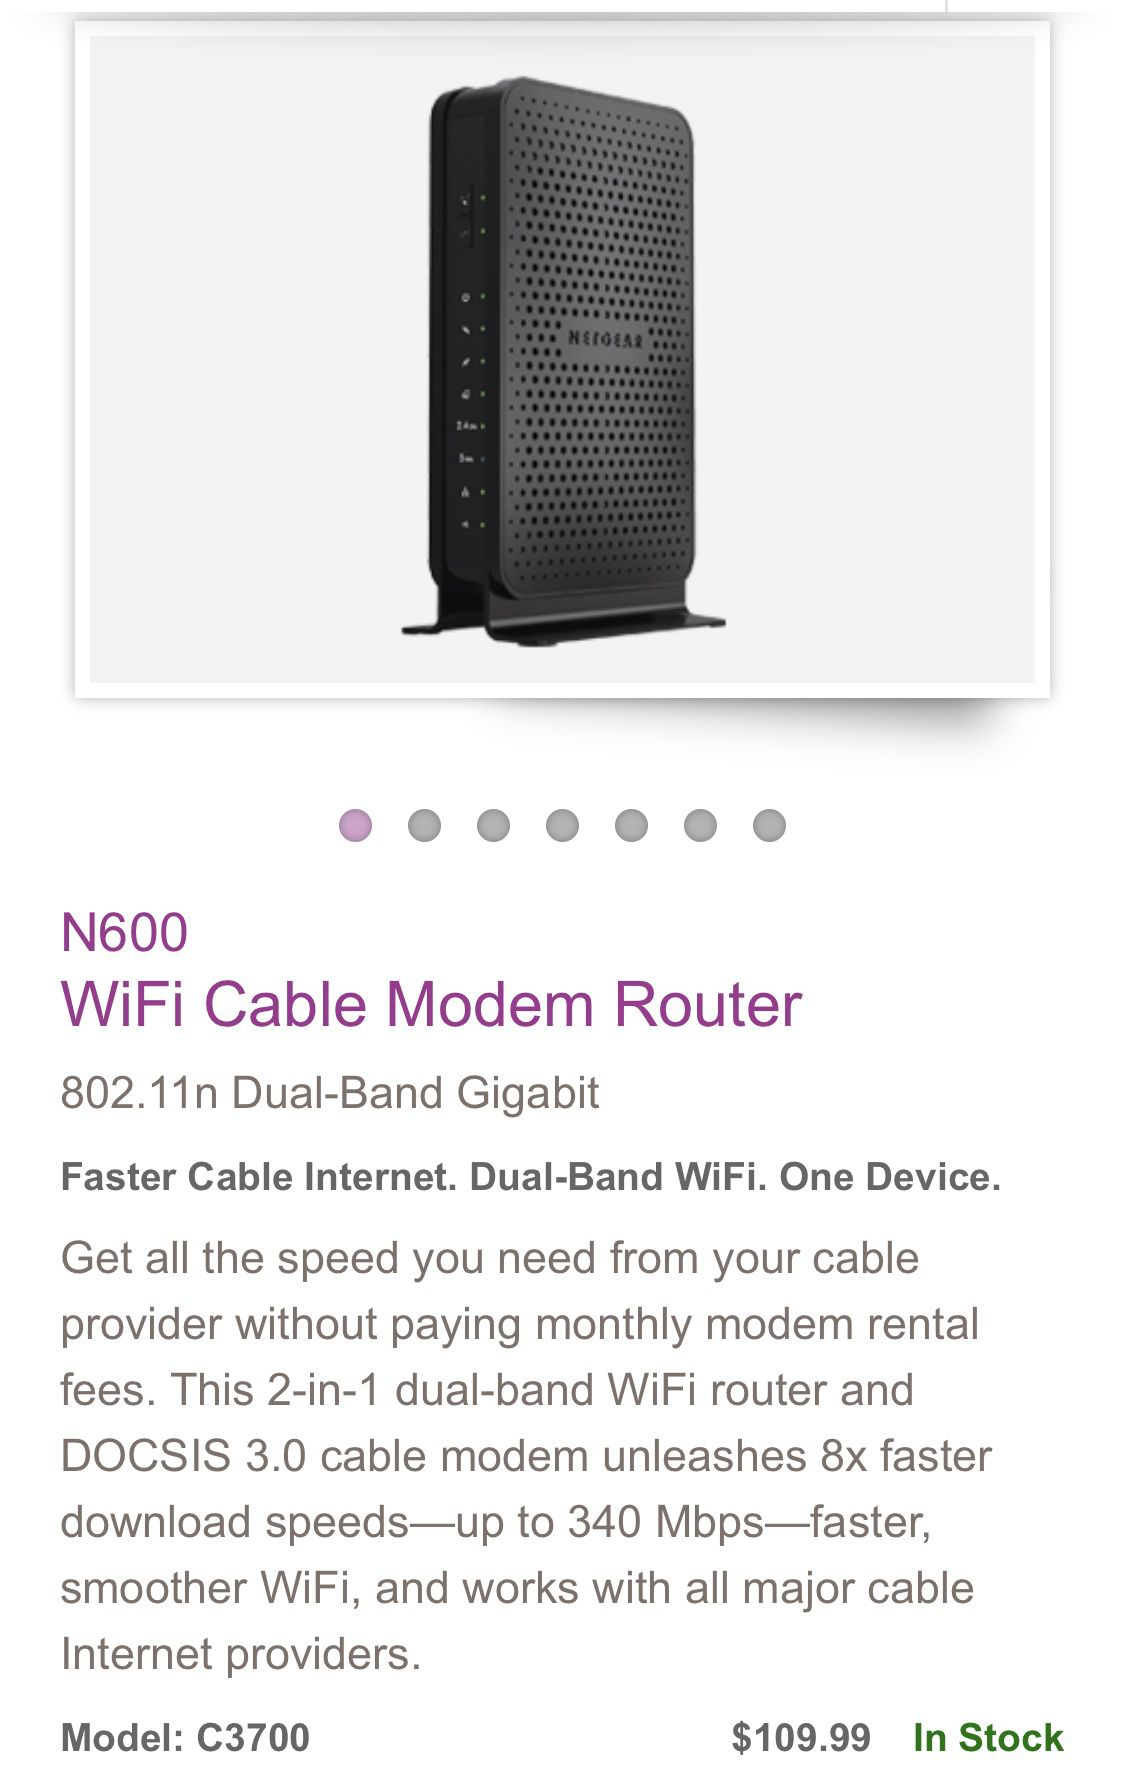 WiFi cable modem router NETGEAR N600